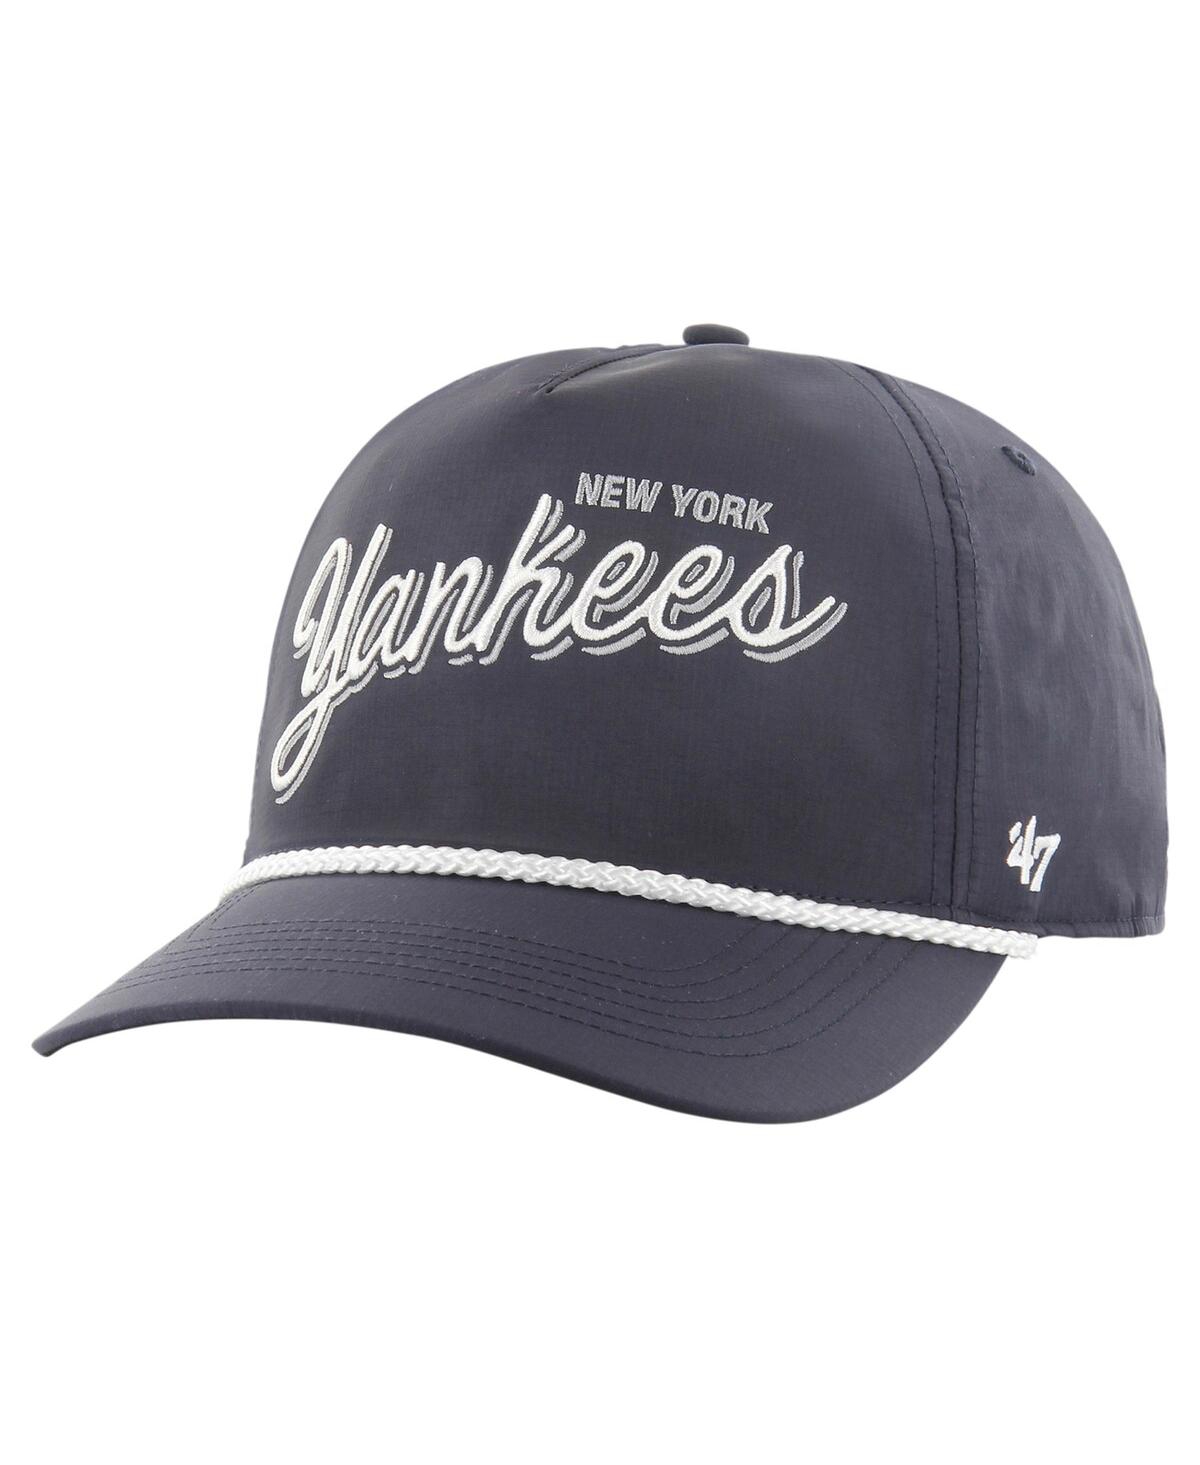 47 Brand Men's Navy New York Yankees Fairway Hitch Adjustable Hat - Navy